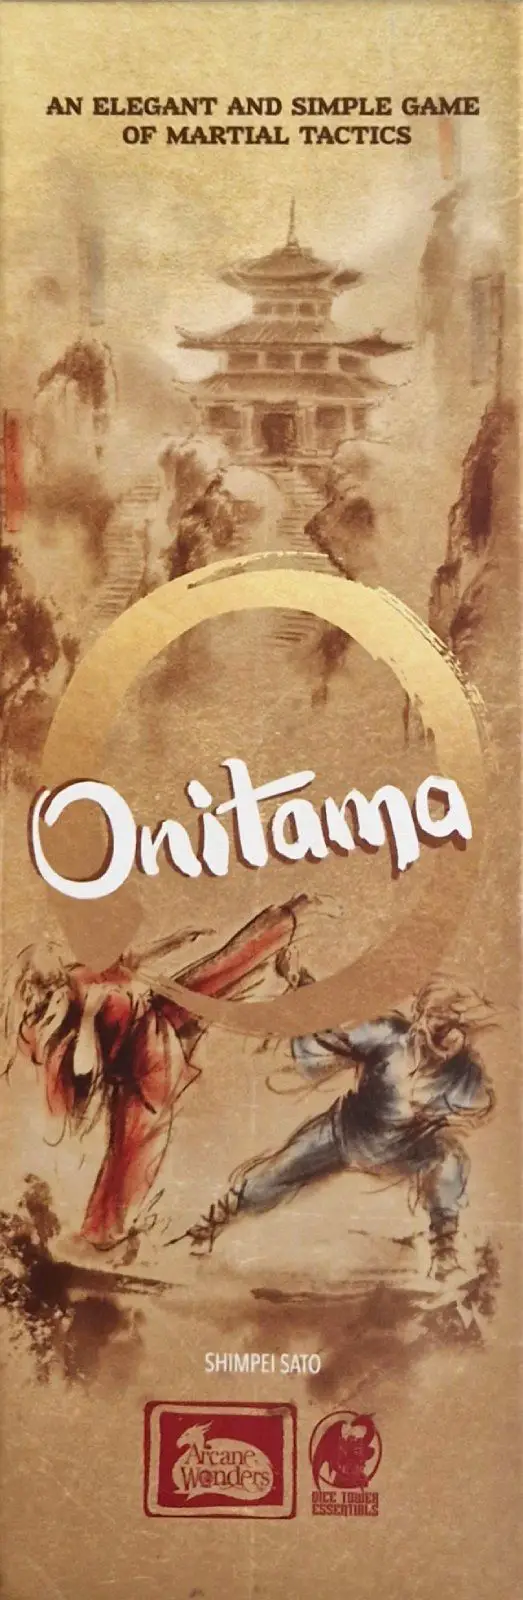 Onitama box art